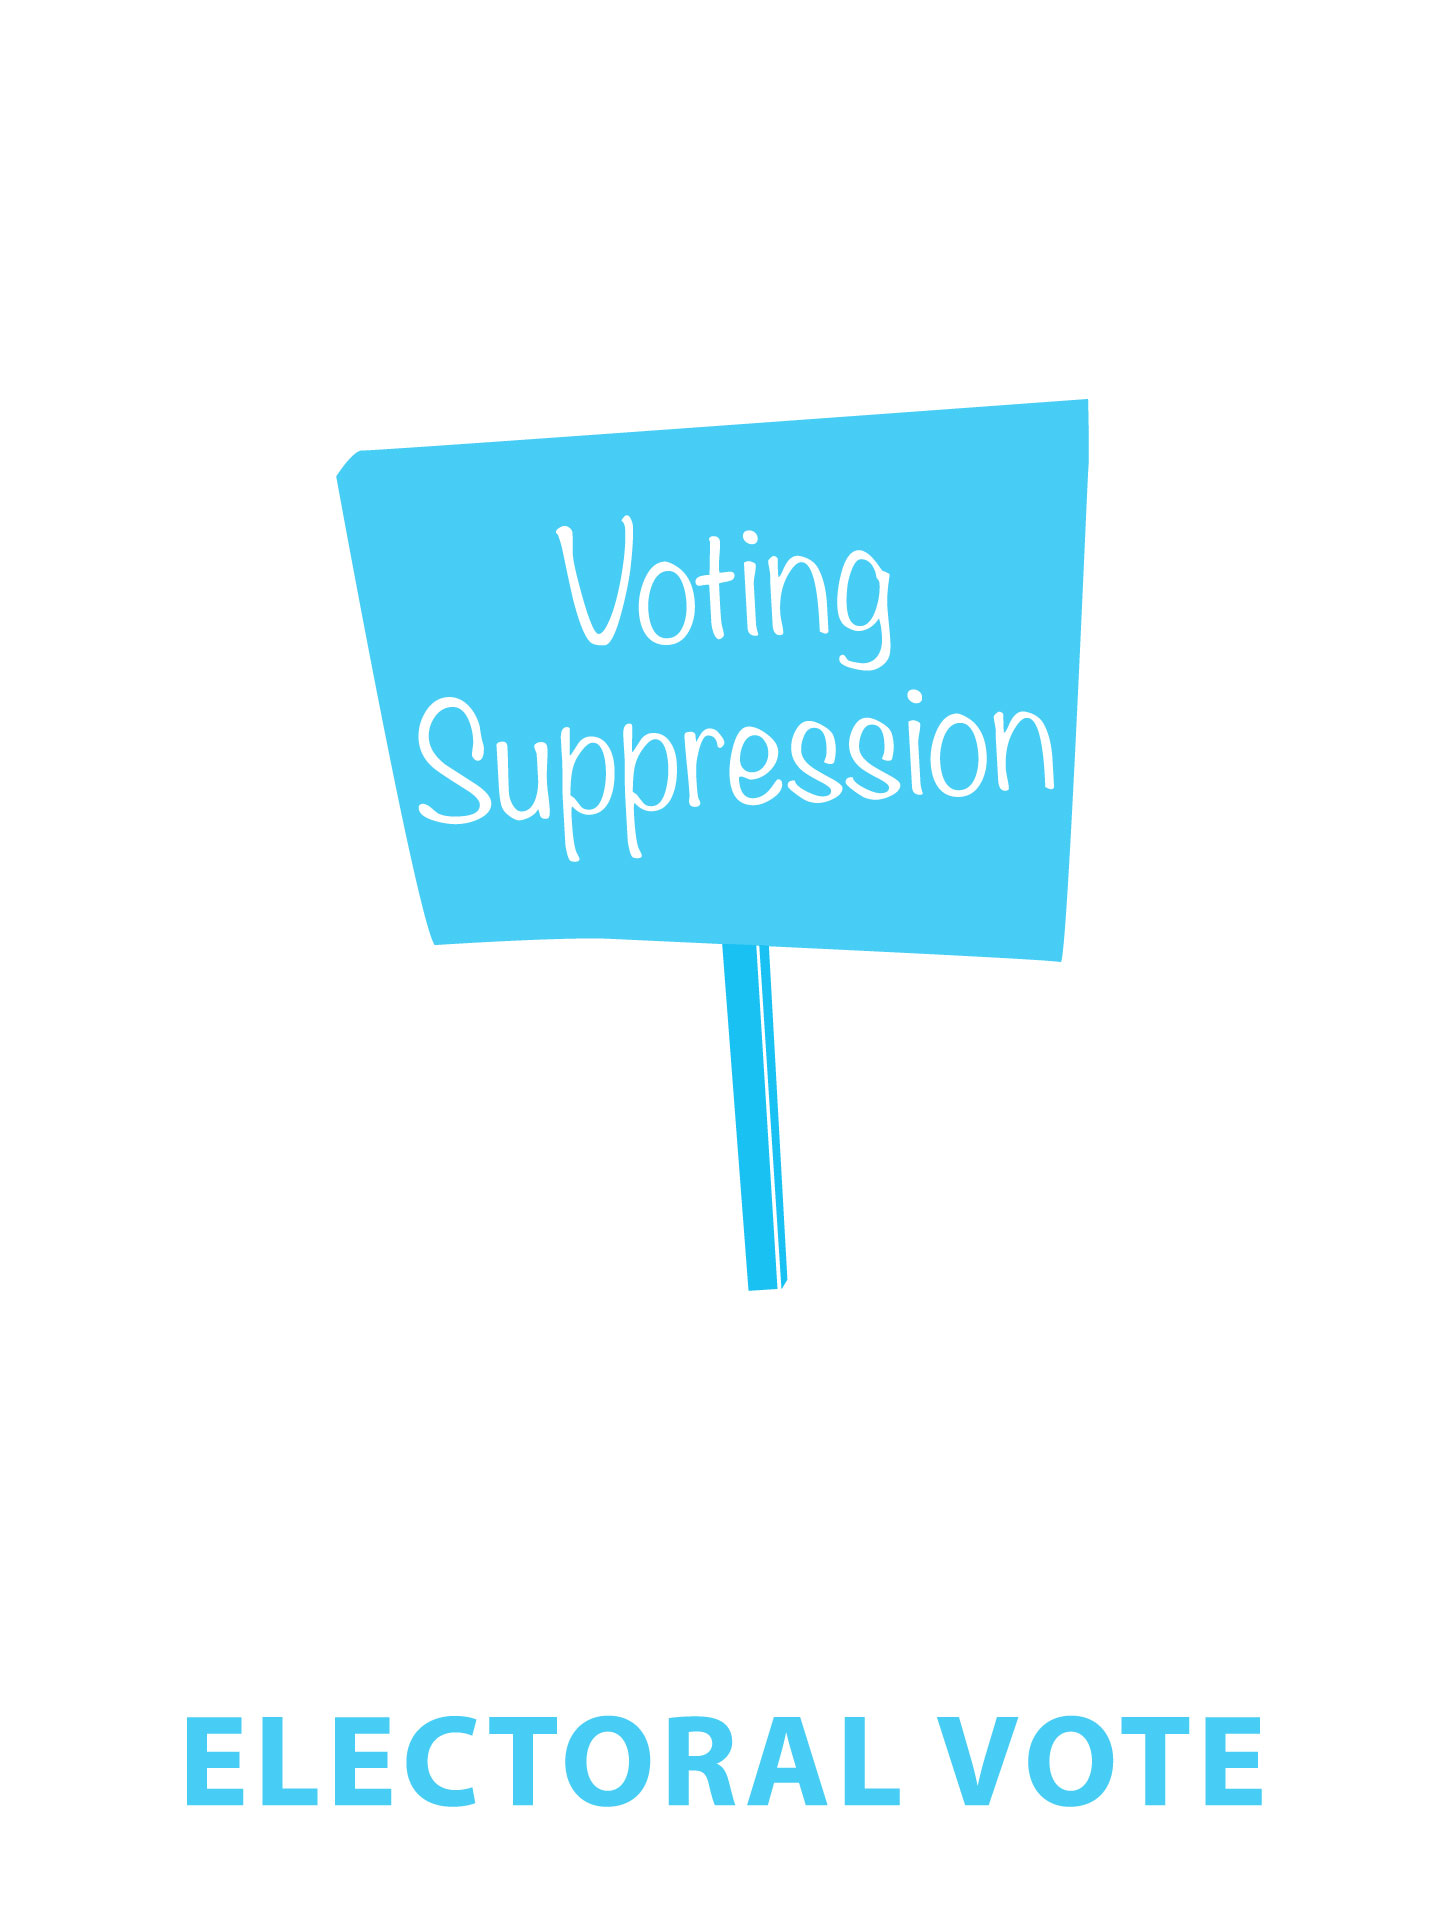 Illustration of Voting Suppression by NFT Latinx Womnx decolonizing artist